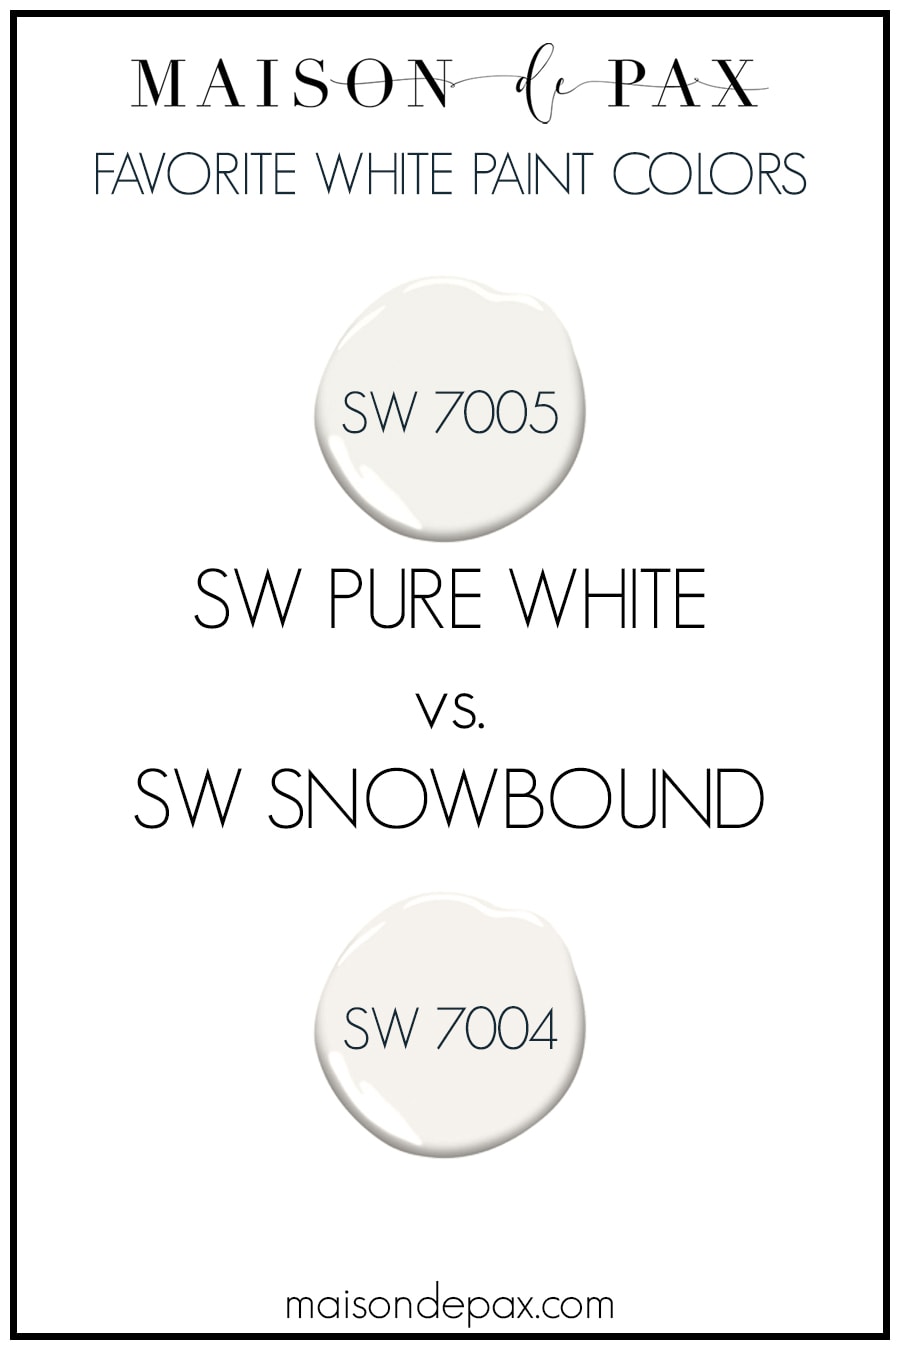 sw pure white vs snowbound paint analysis